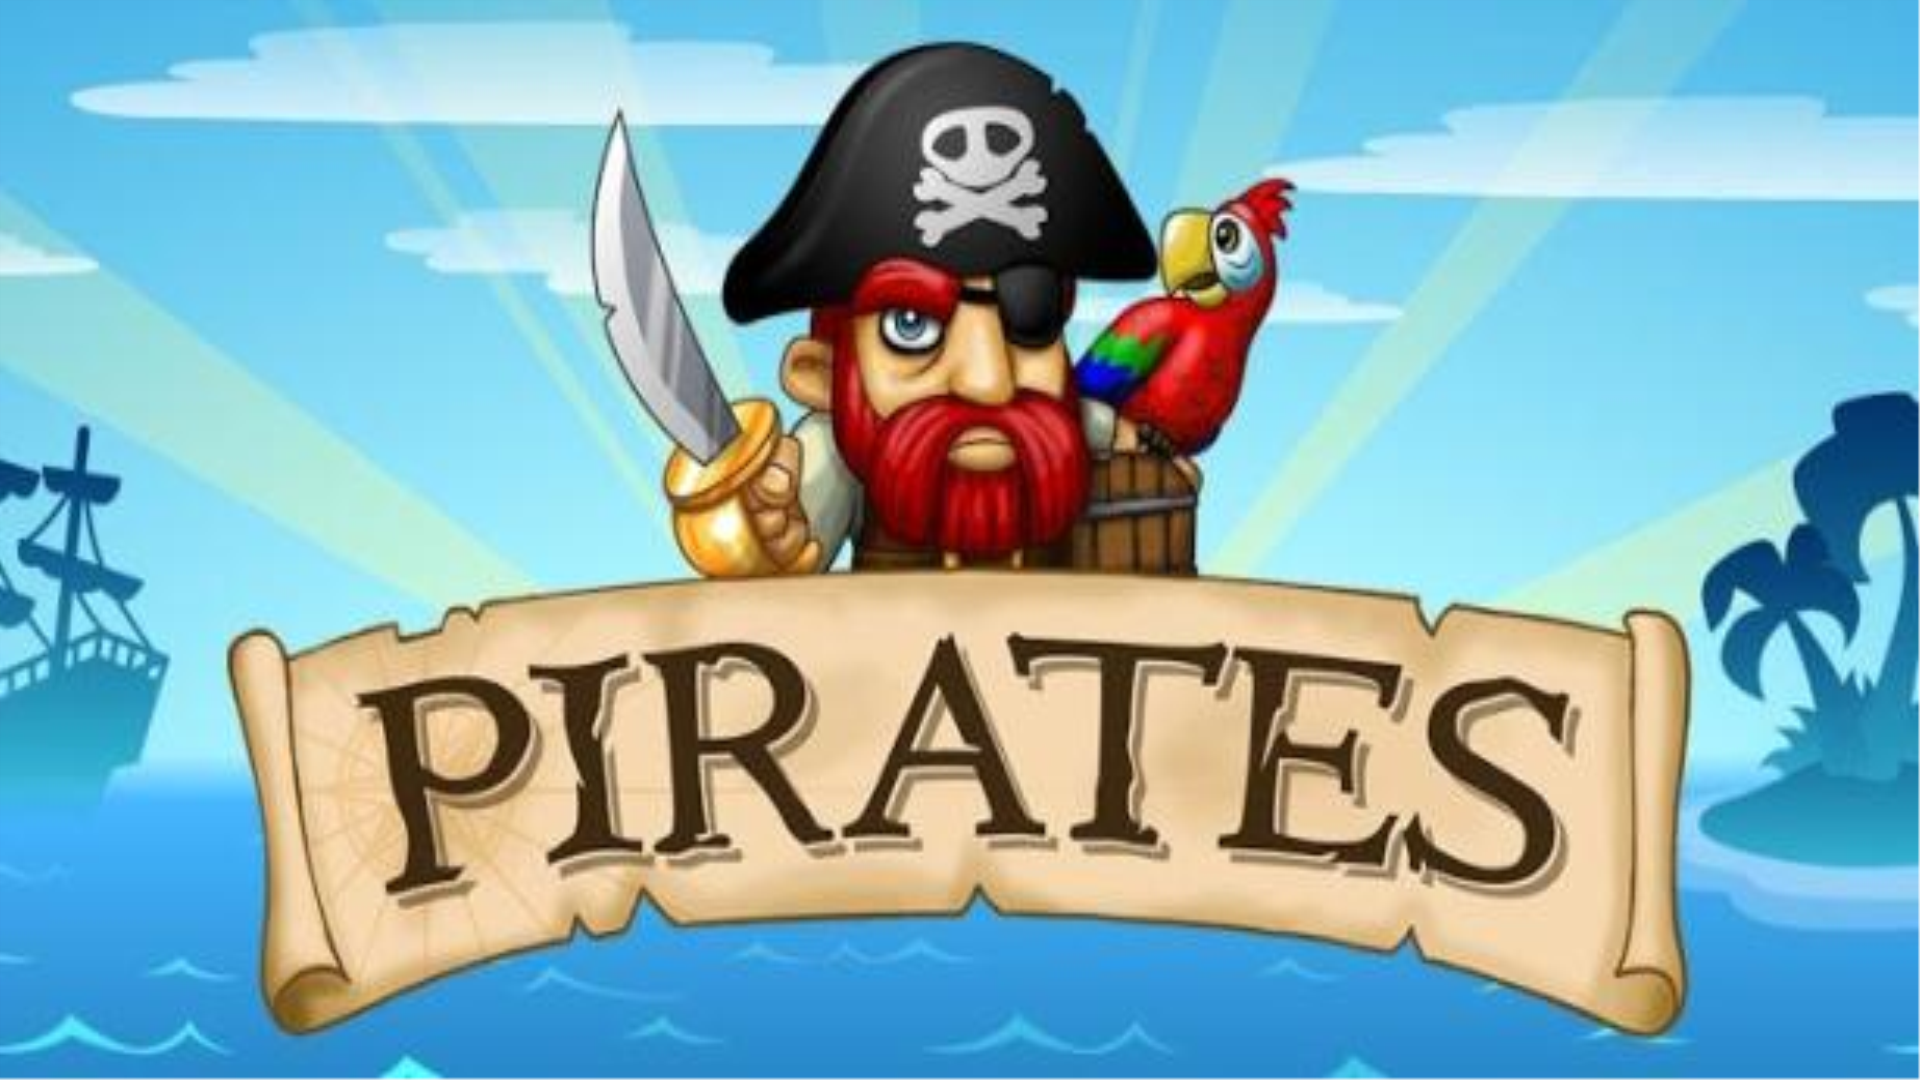 Игра пираты на телефон андроид. Pirates Pirates игра. Пираты на андроид. Пираты игра мобильная. Игра про пиратов на Android.